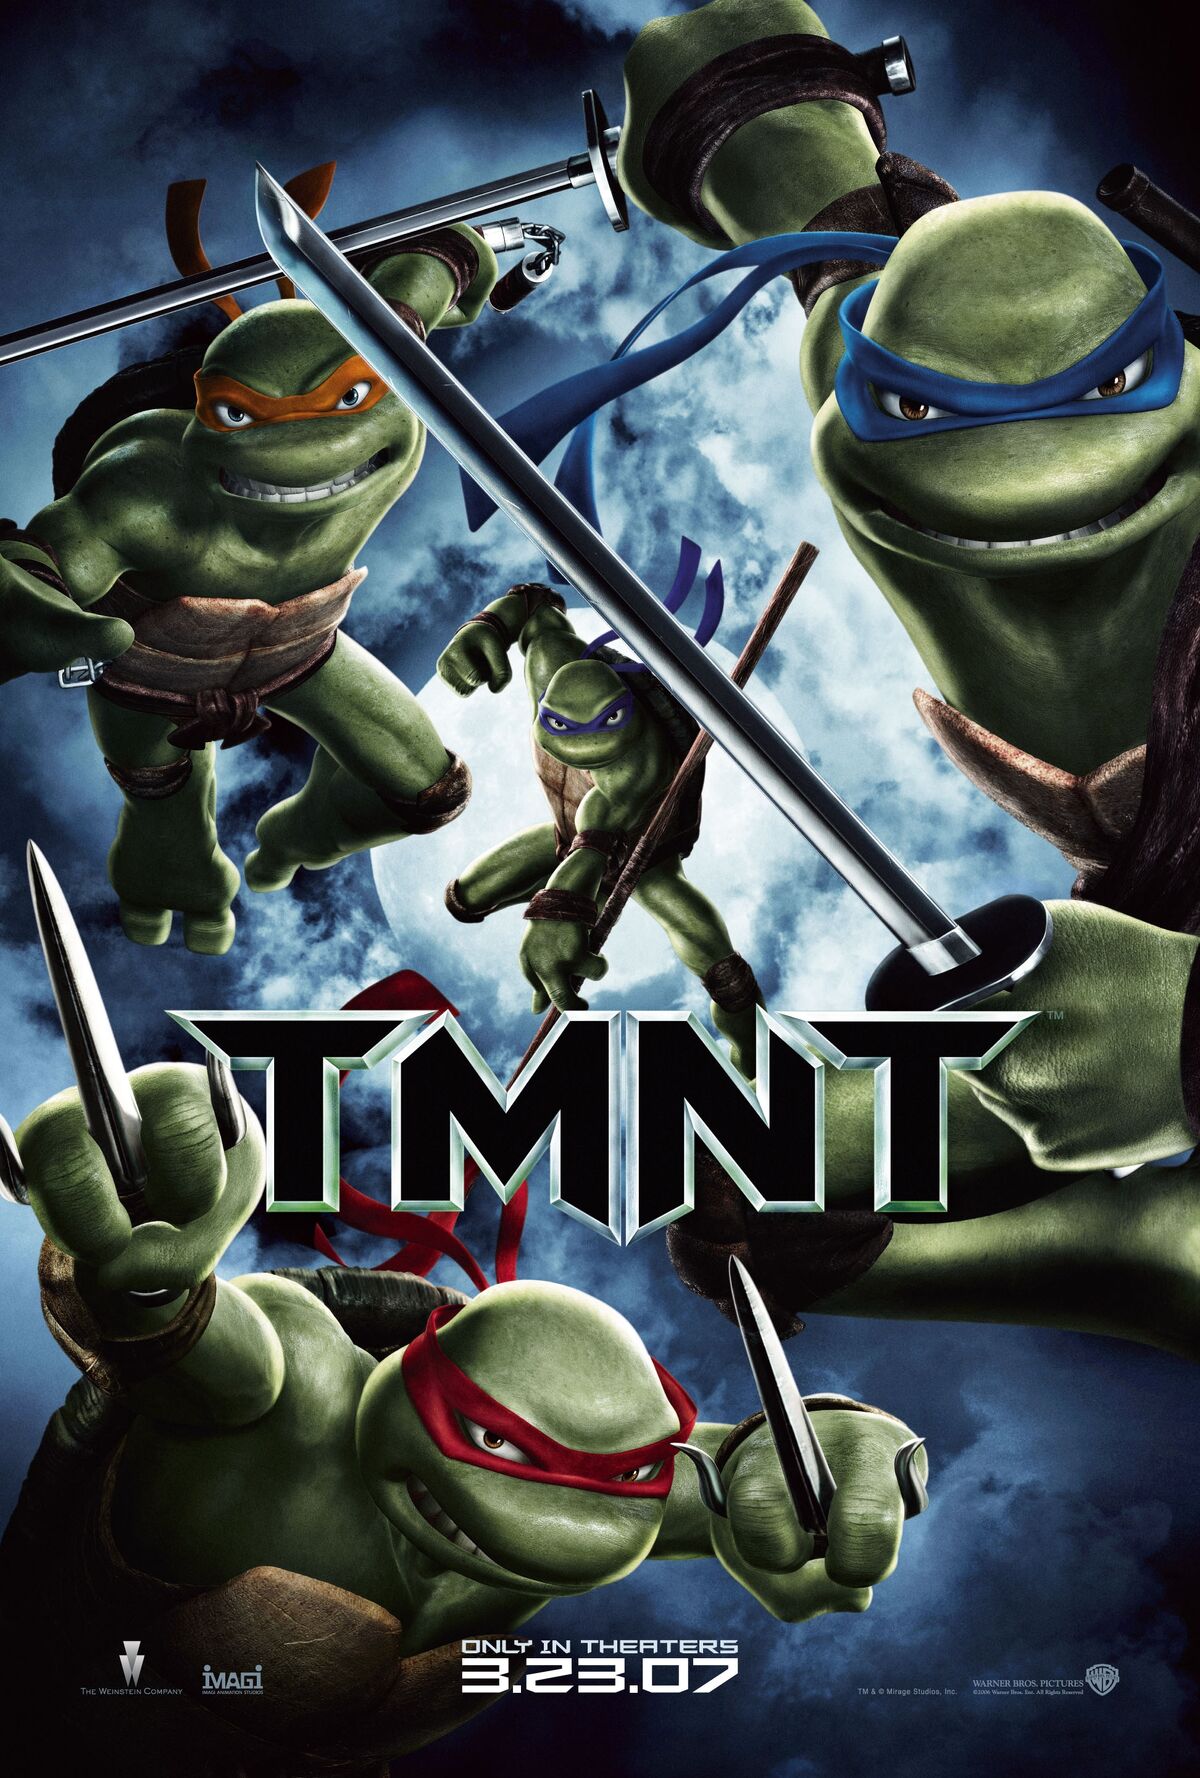 New Horizons Production Teenage Mutant Ninja Turtles Cast Black Genuine  Leather Band Wrist Watch